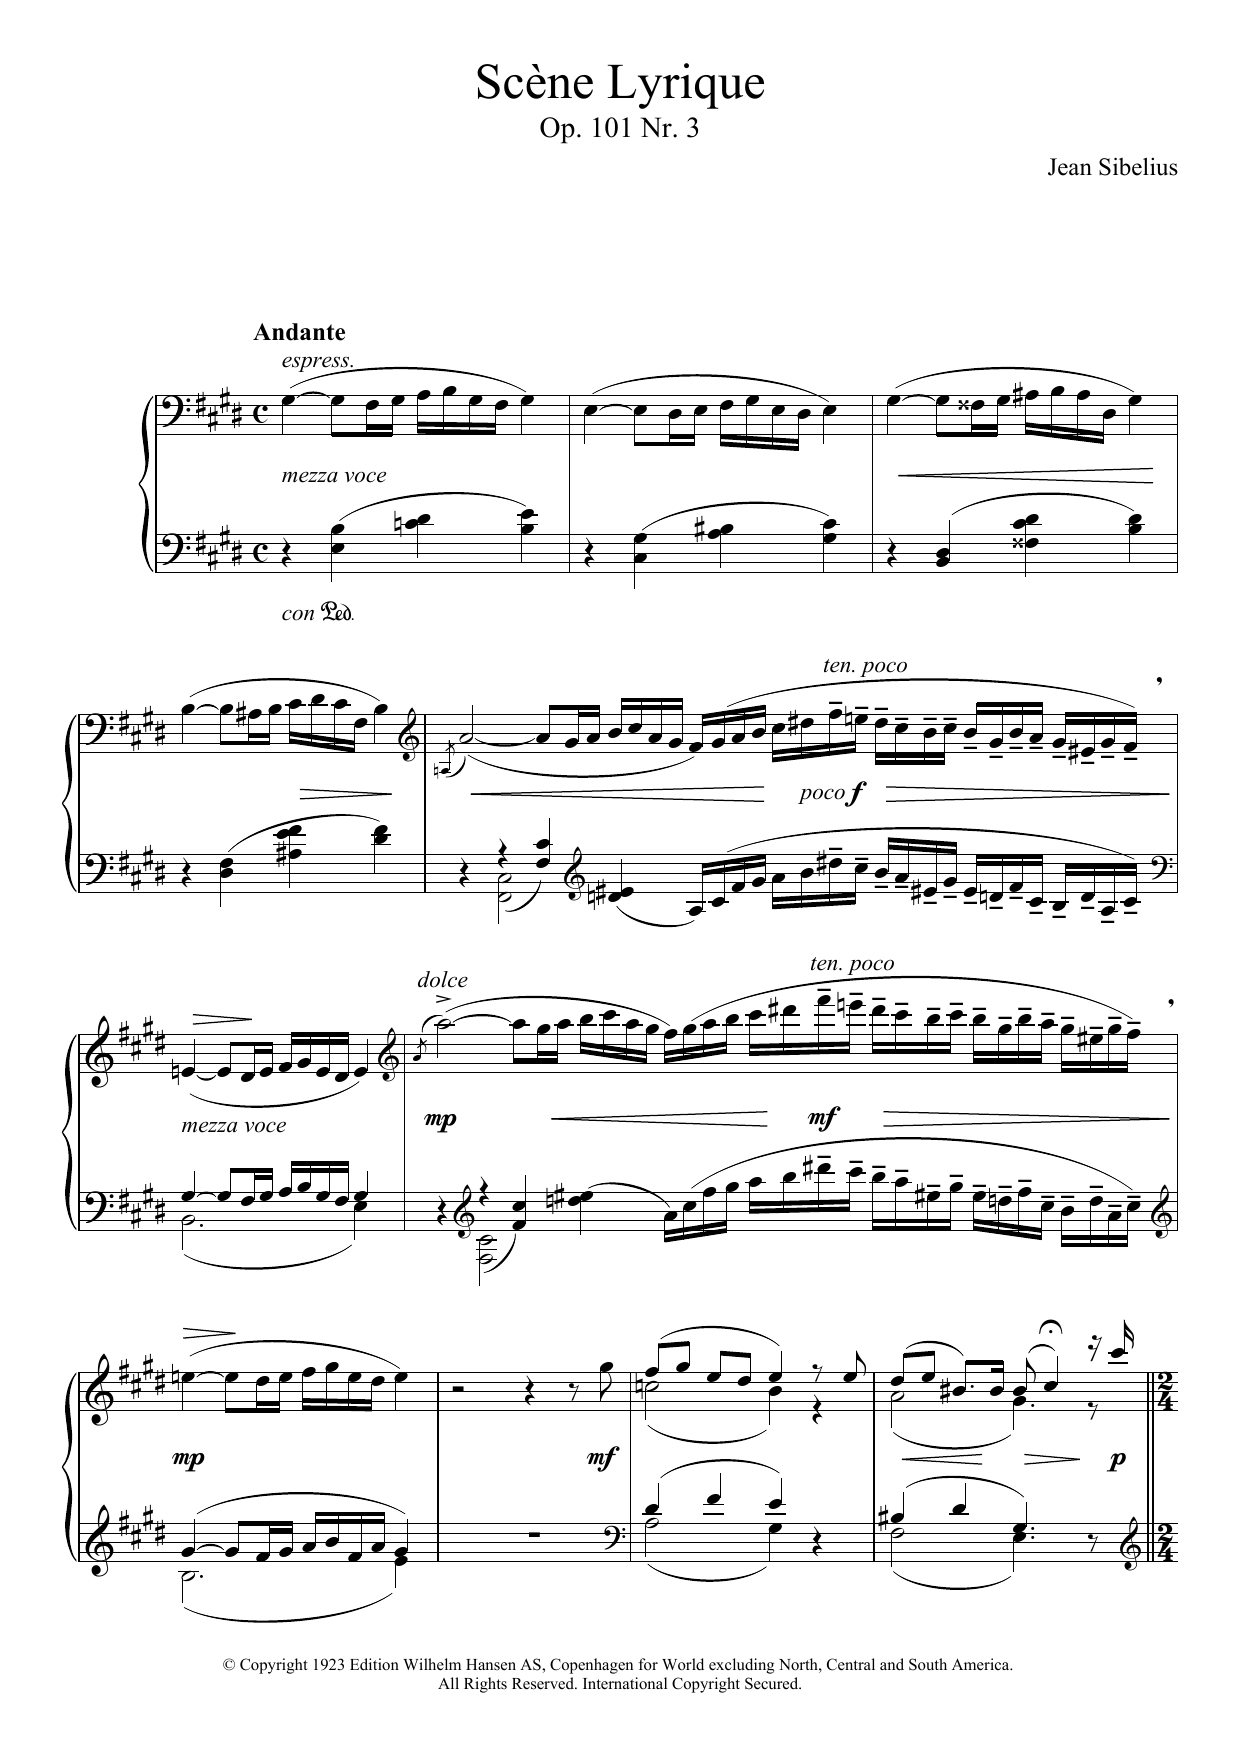 Download Jean Sibelius 5 Morceaux Romantiques, Op.101 - III. Scène Lyrique Sheet Music and learn how to play Piano PDF digital score in minutes